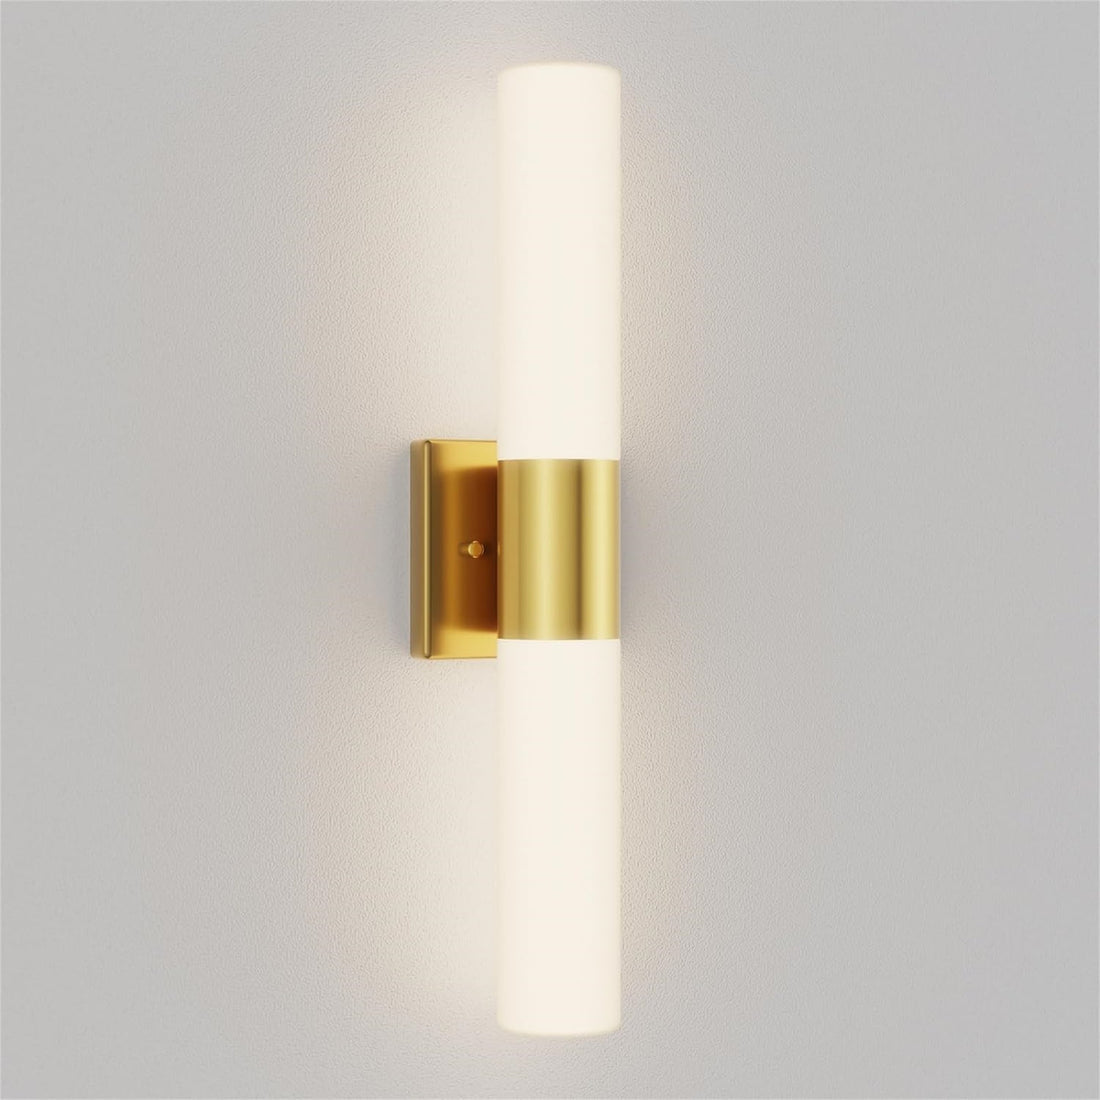 2 Light Bathroom Light Fixtures Gold Wall Sconce